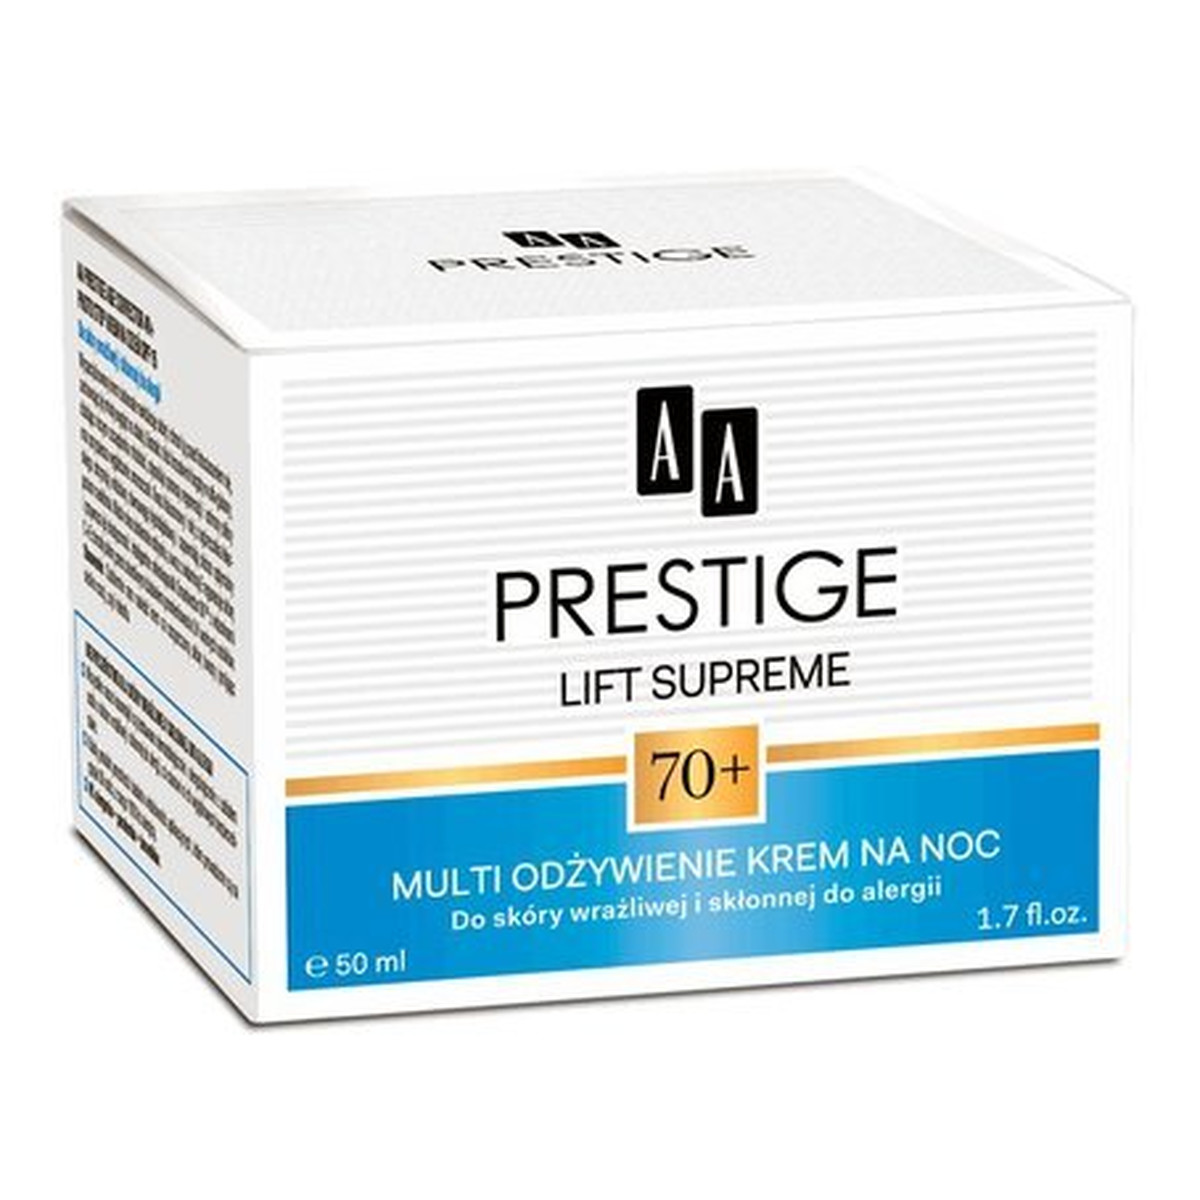 AA Prestige Lift Supreme 70+ Multi Odżywienie Krem Na Noc 50ml